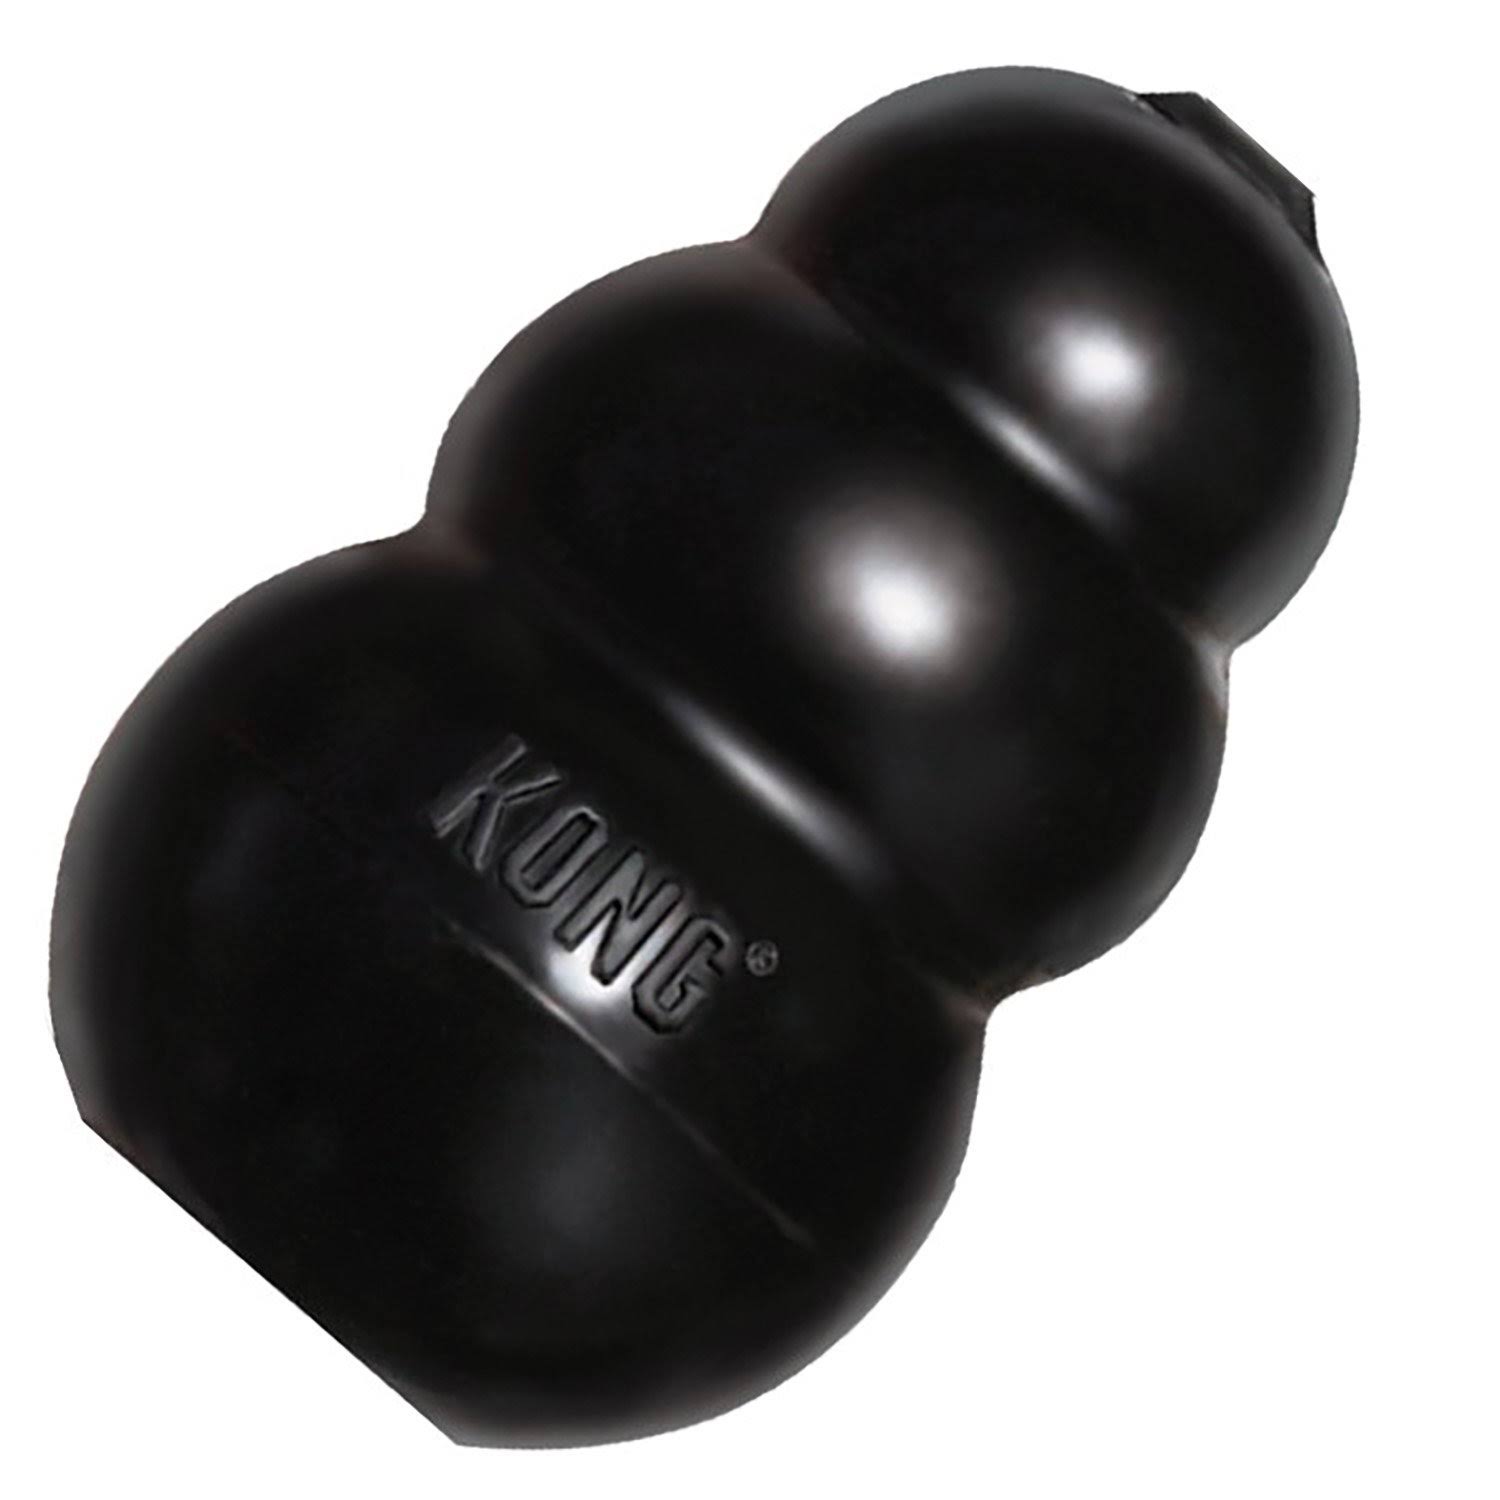 Kong Extreme Rubber Dog Toy - Black, Medium